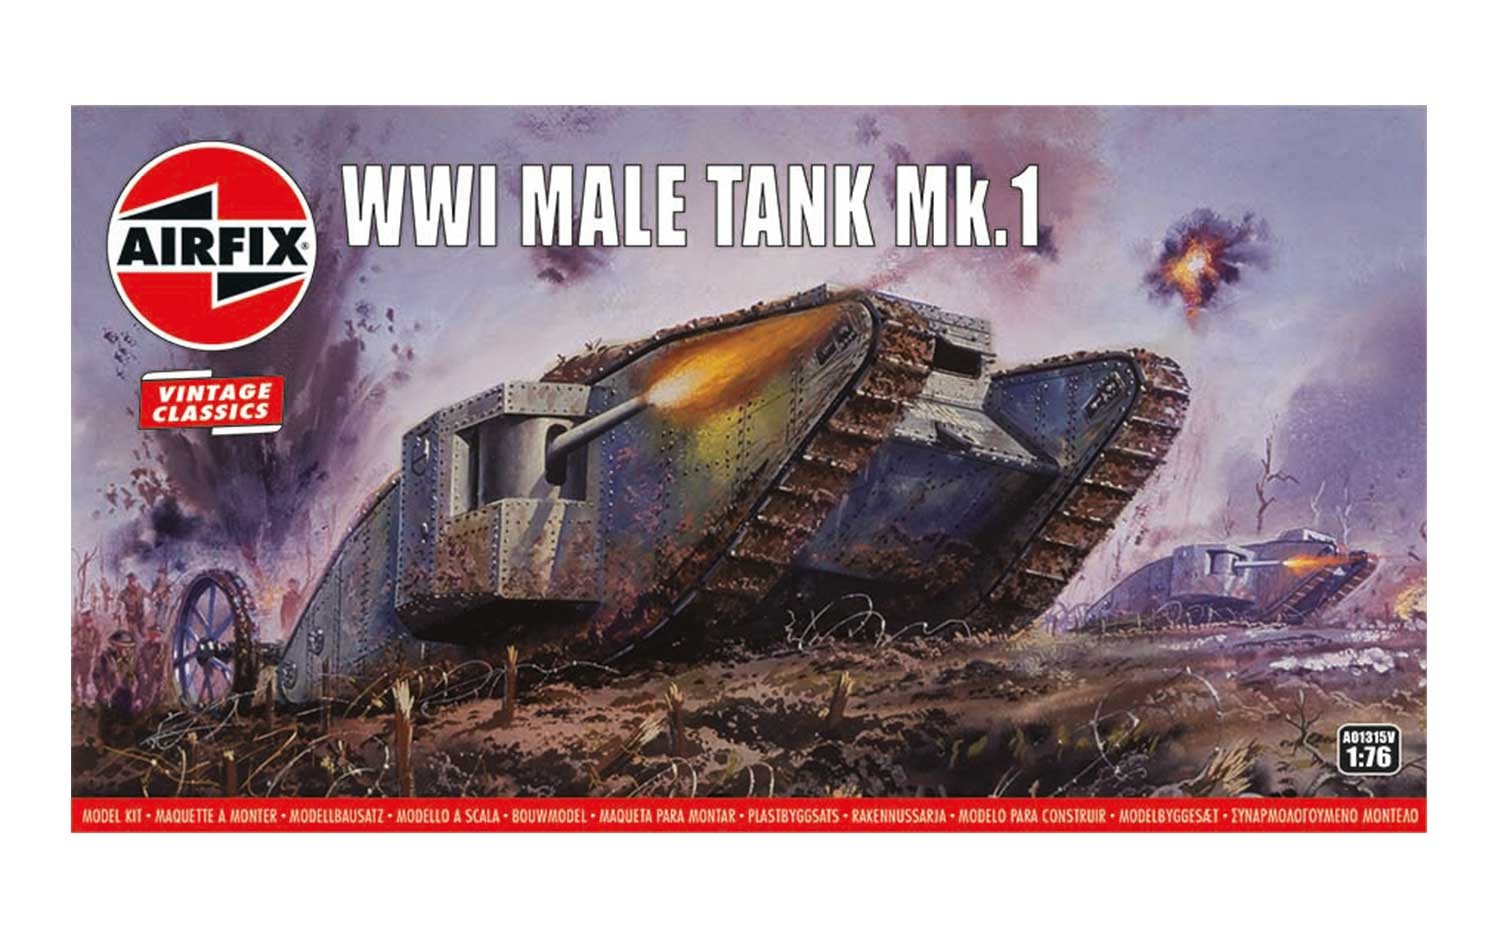 Airfix A01315V ww1 male tank mk.1  1:76